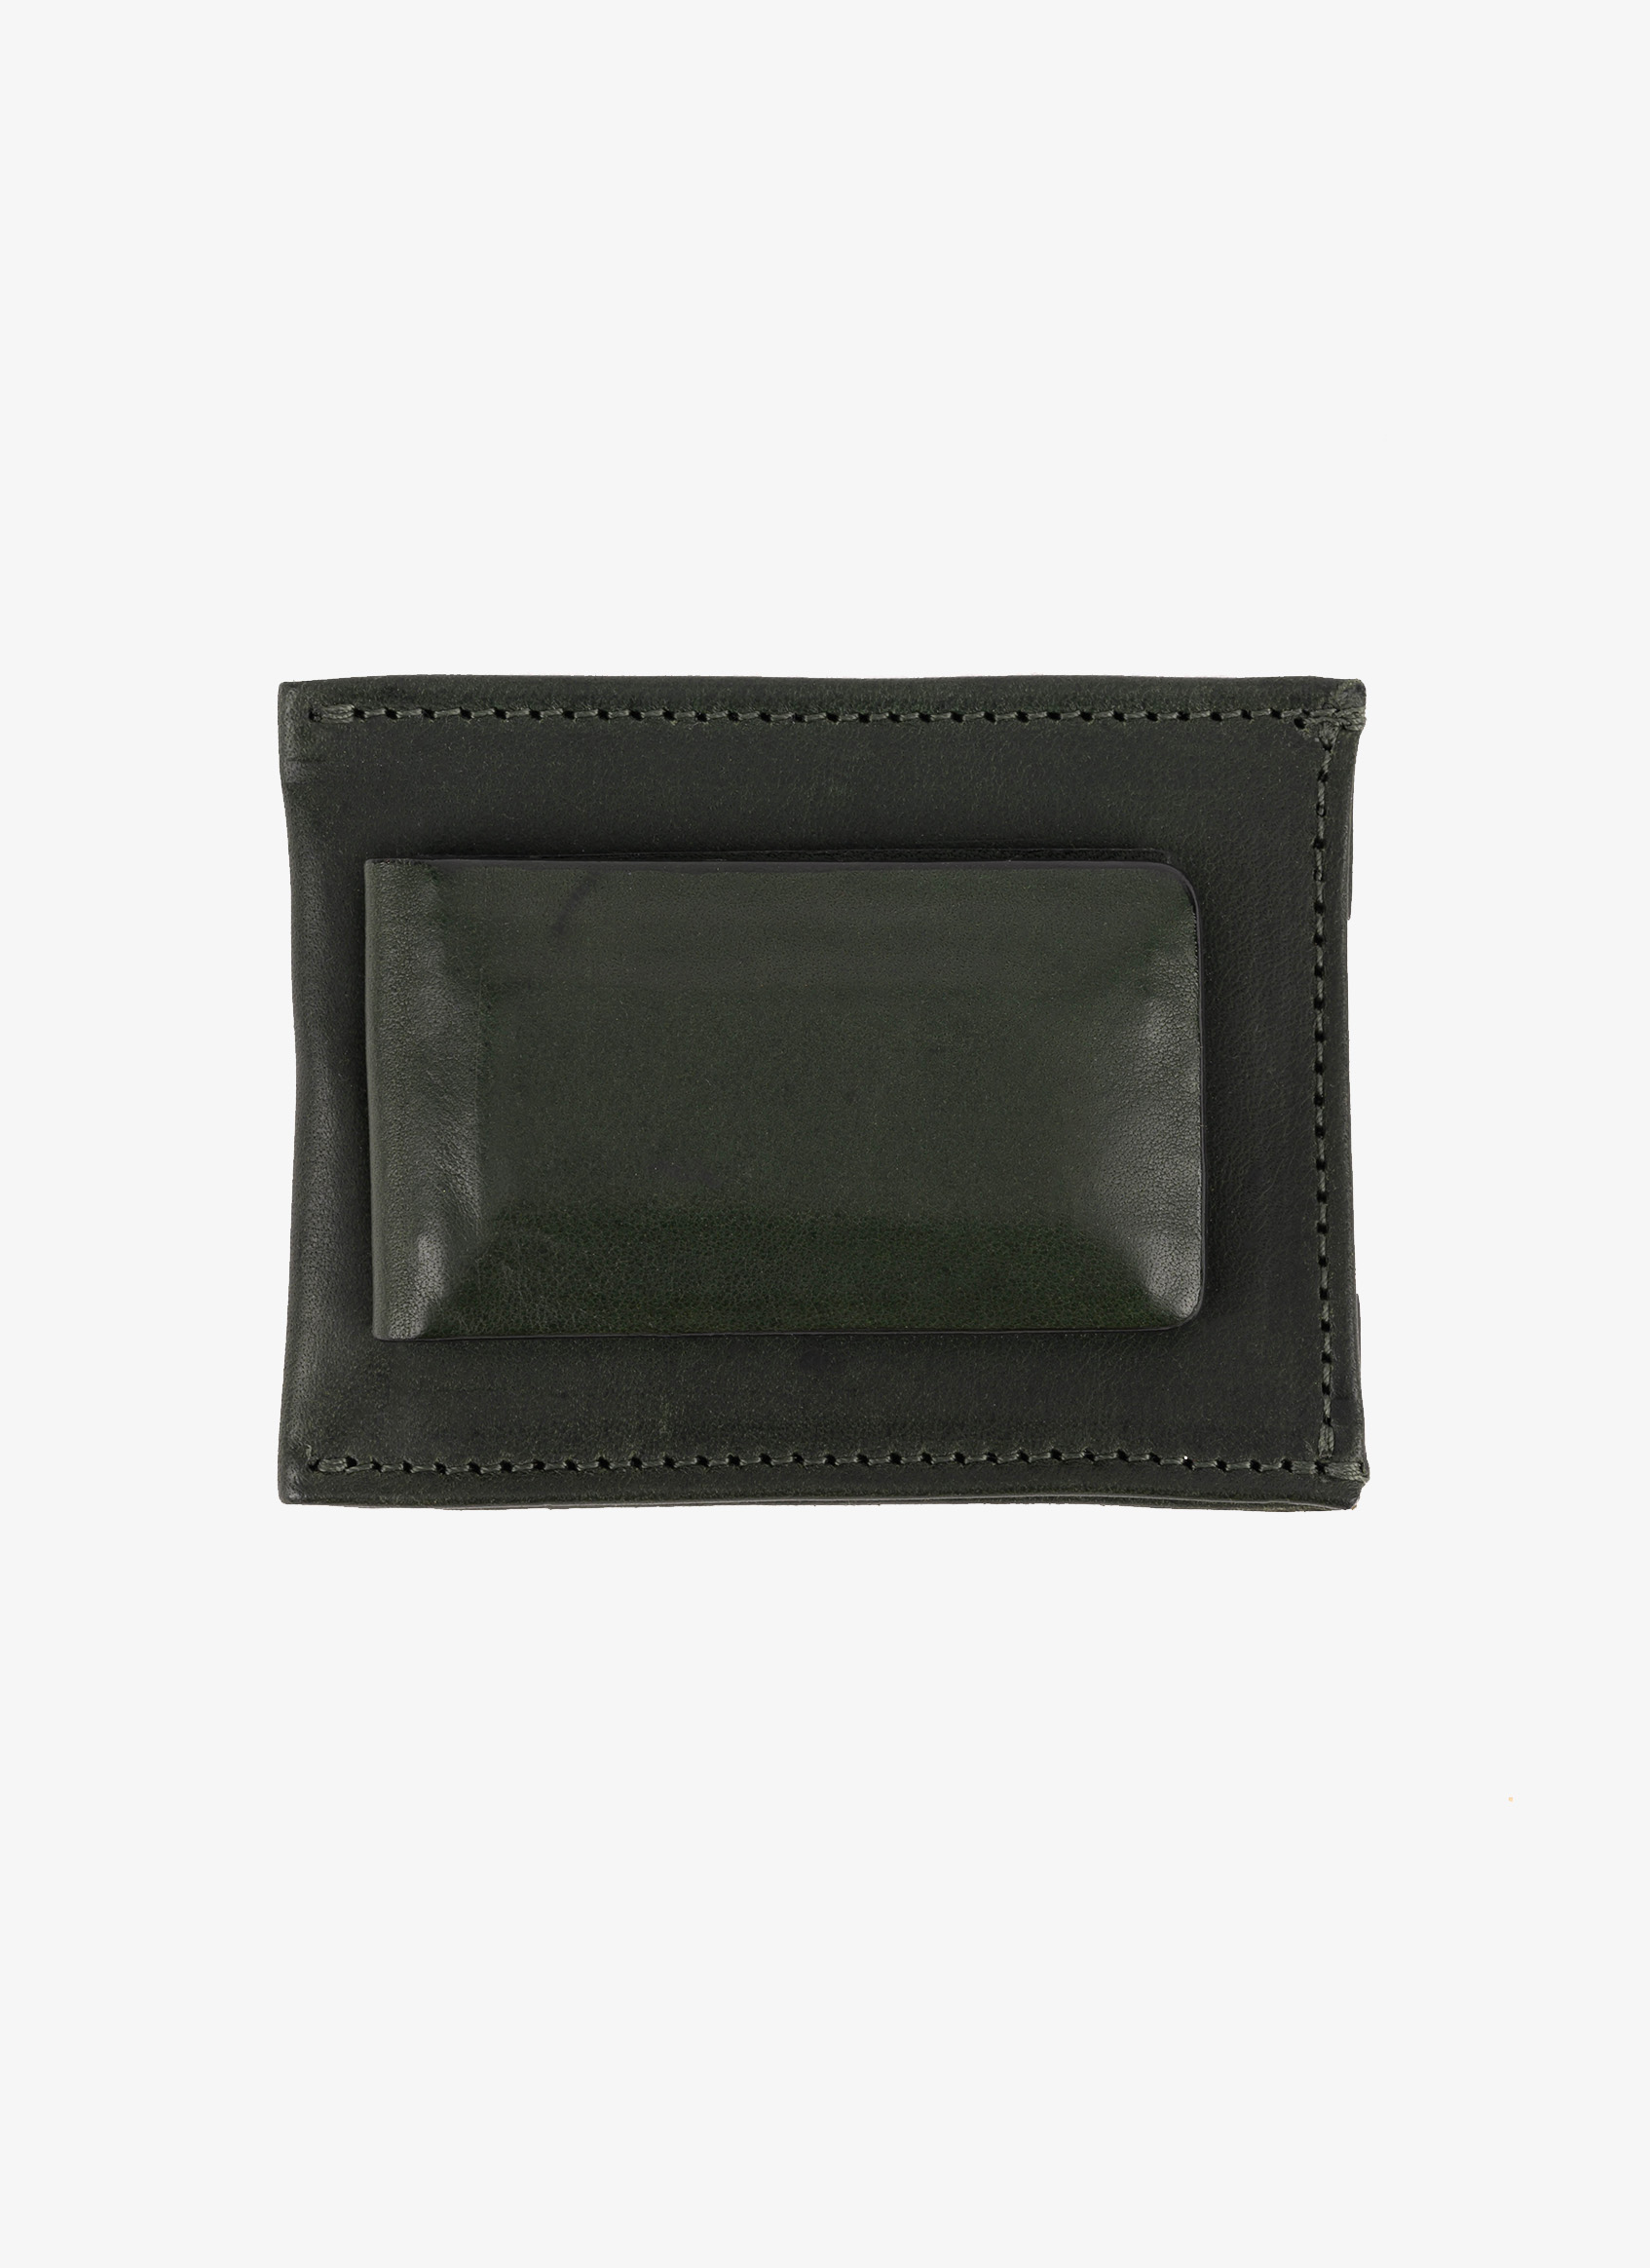 Leather Money Bag Credit Card Holder Purse Wallet - China Mens